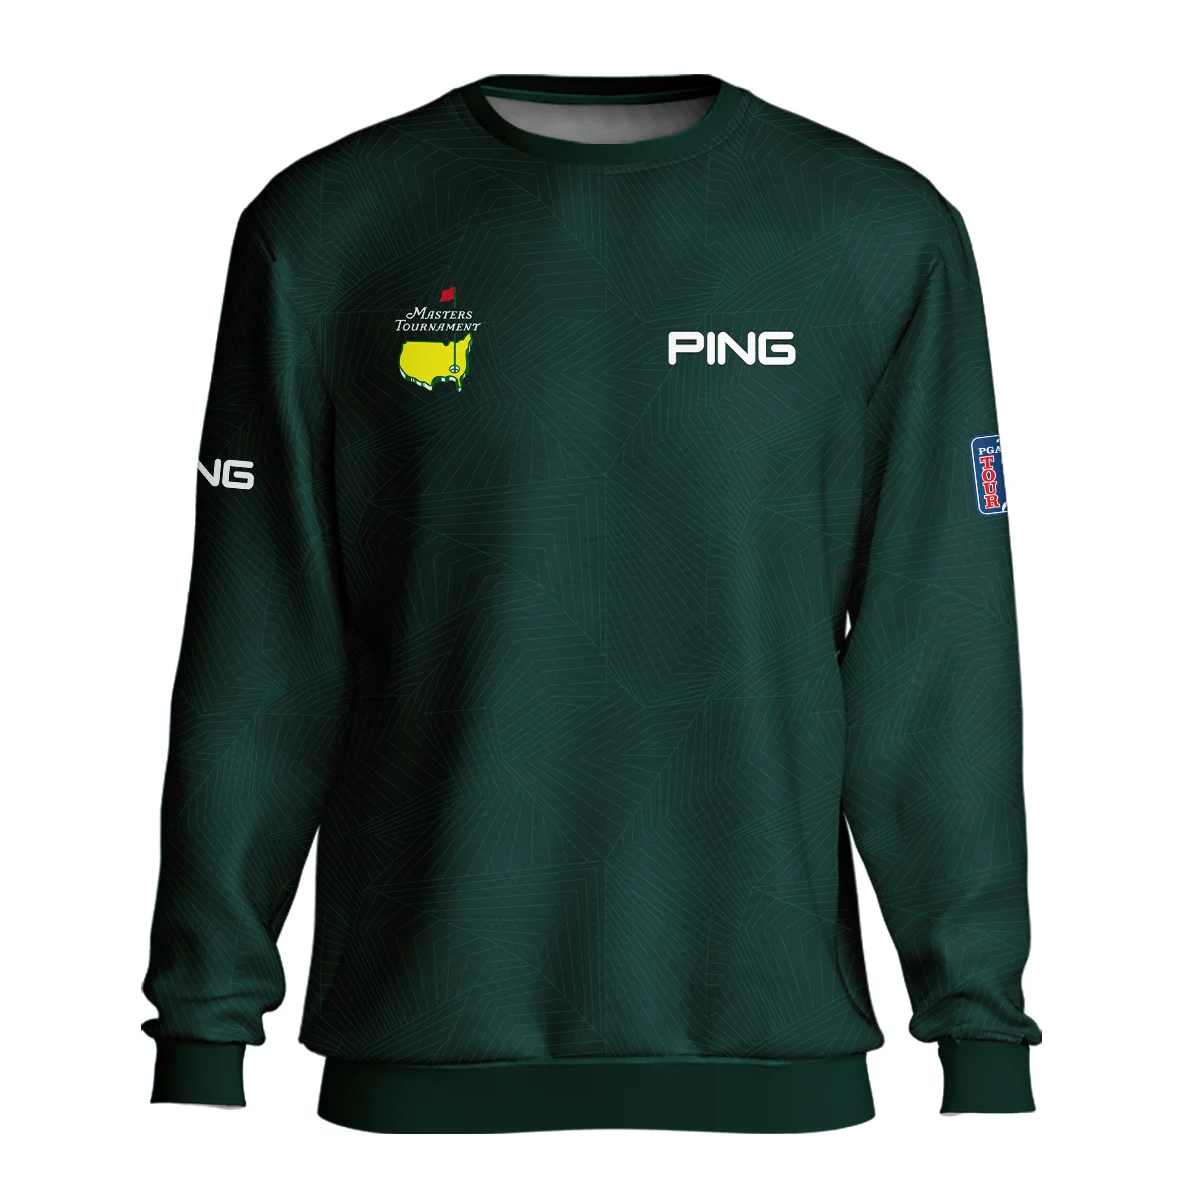 Masters Tournament Ping Pattern Sport Jersey Dark Green Unisex Sweatshirt Style Classic Sweatshirt